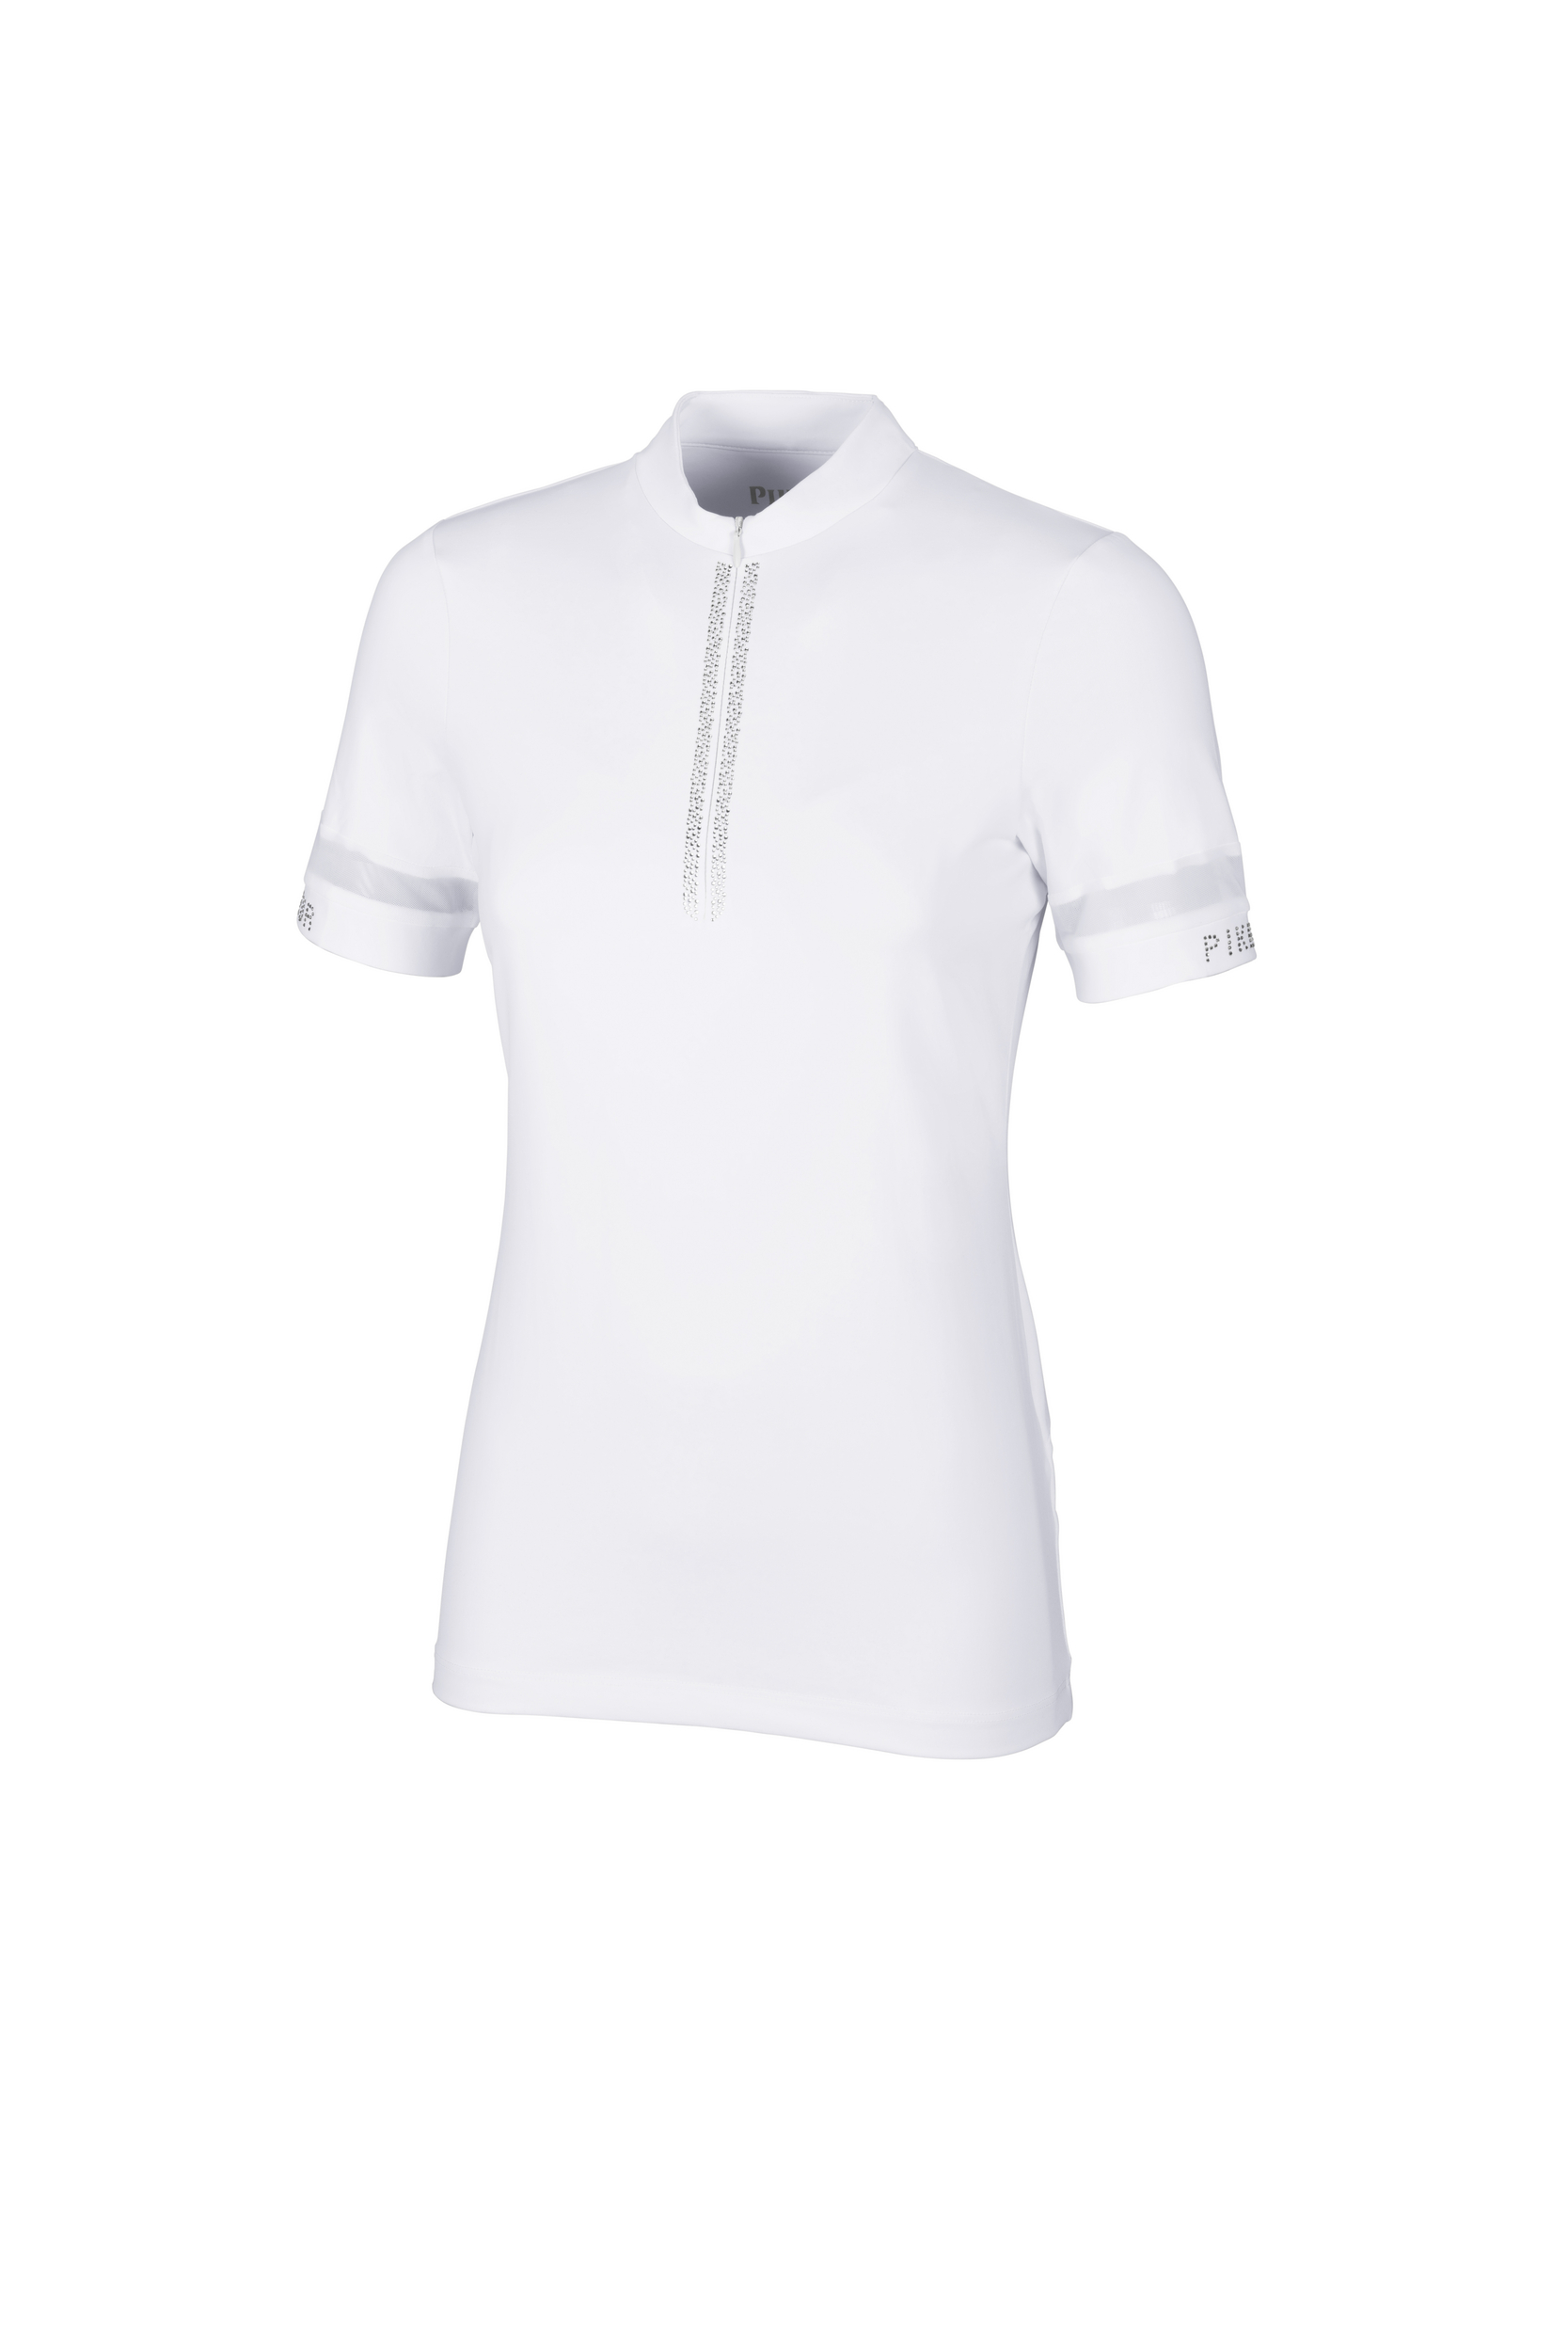 PIKEUR Damen Zip Shirt Kurzarm 5210 Selection 24 - white - 38 - 2